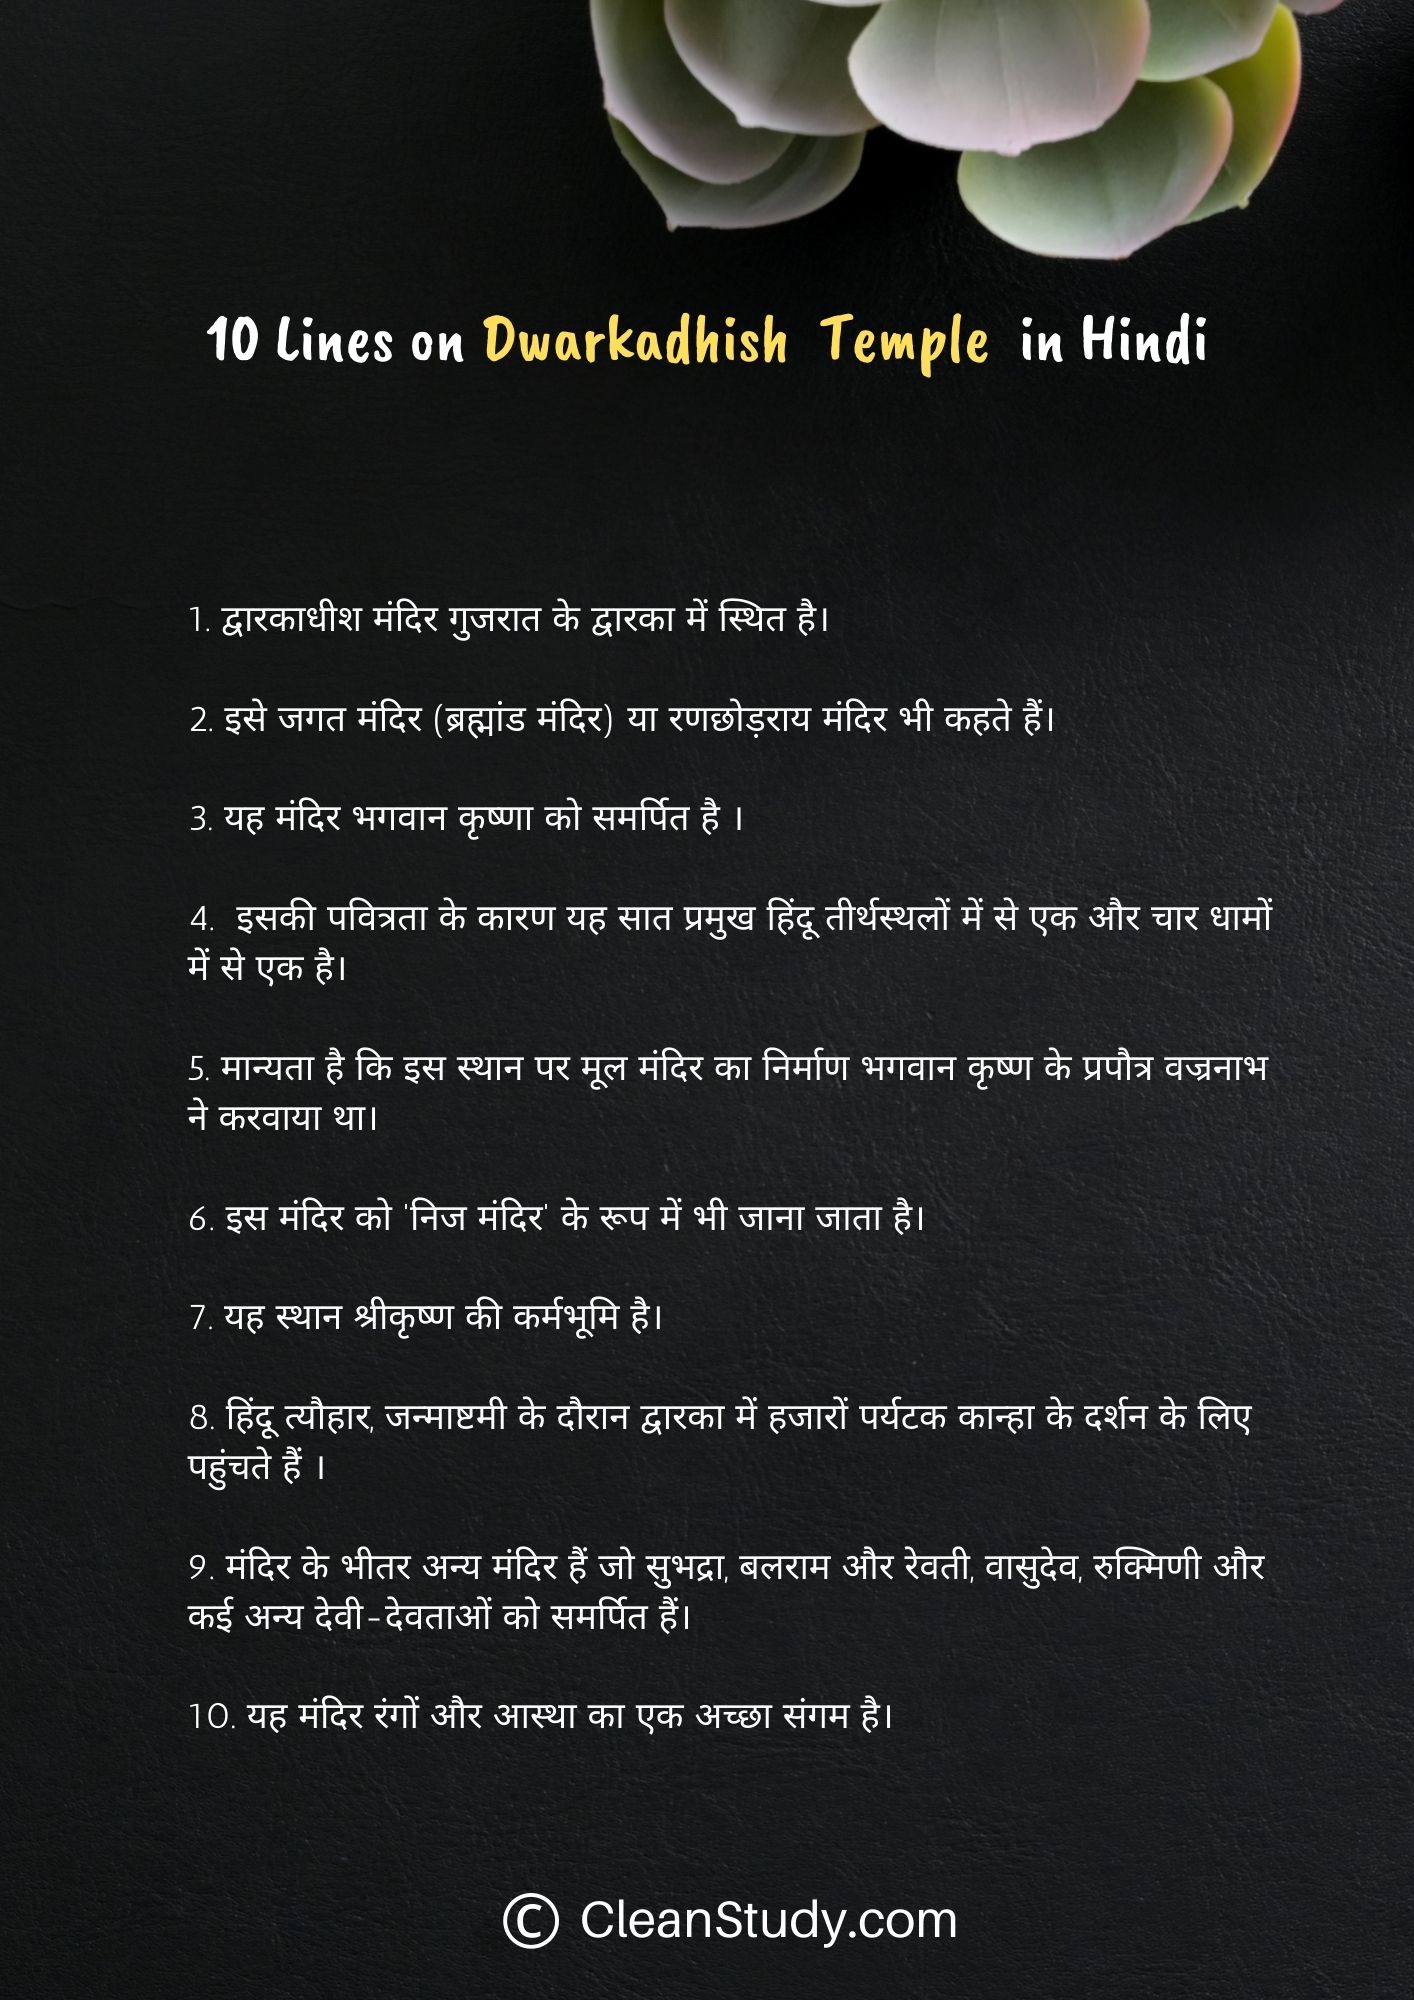 10 Lines on Dwarkadhish Temple in Hindi